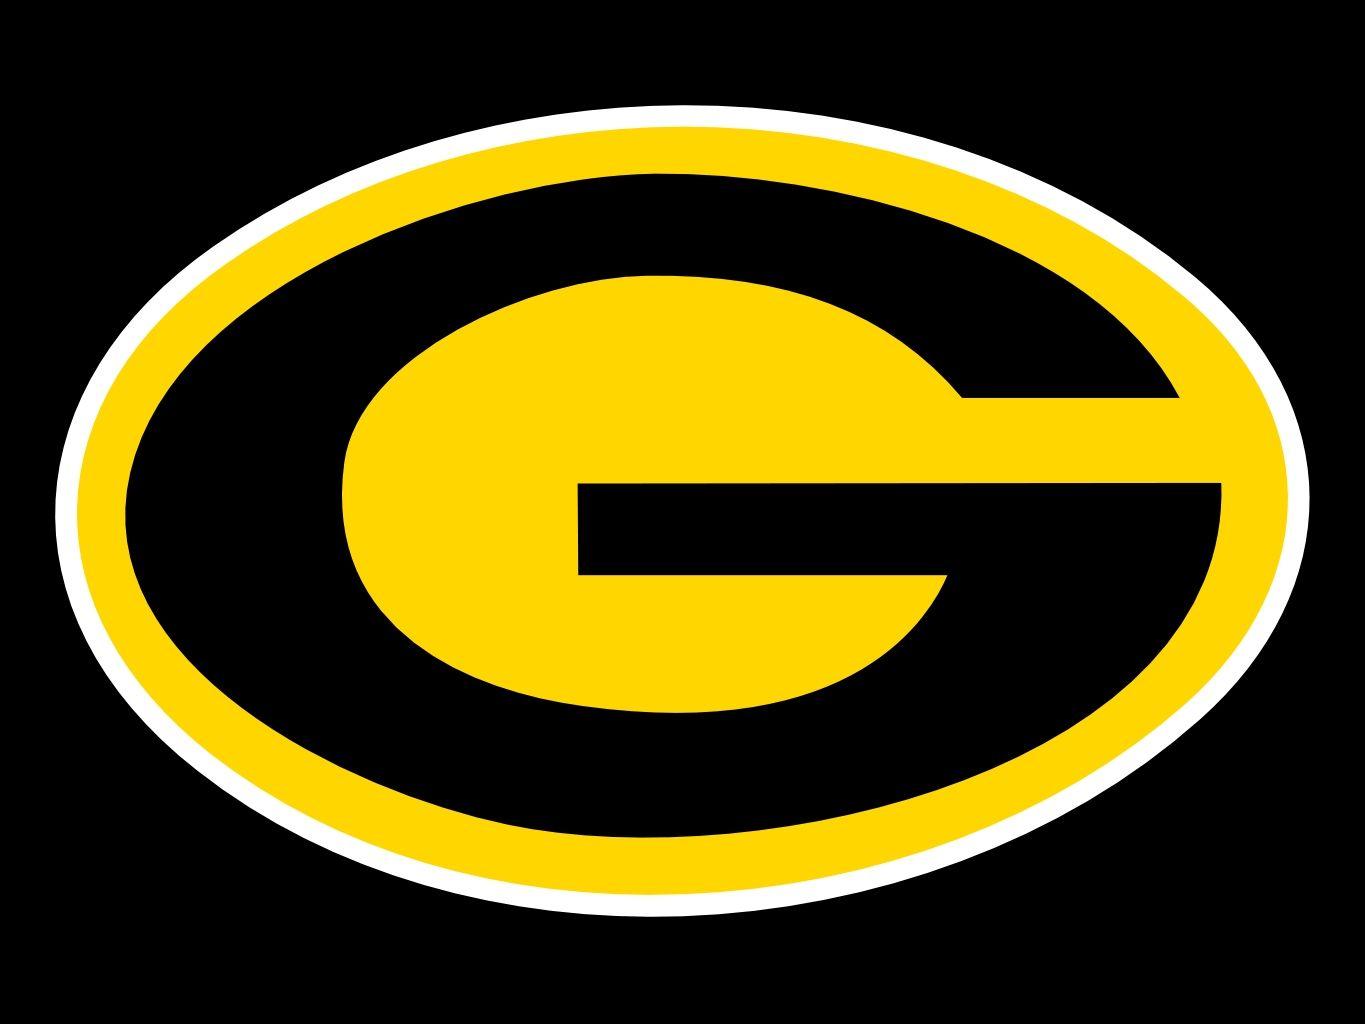 Grambling Logo - Grambling State Tigers | NCAA Athletics Wiki | FANDOM powered by Wikia